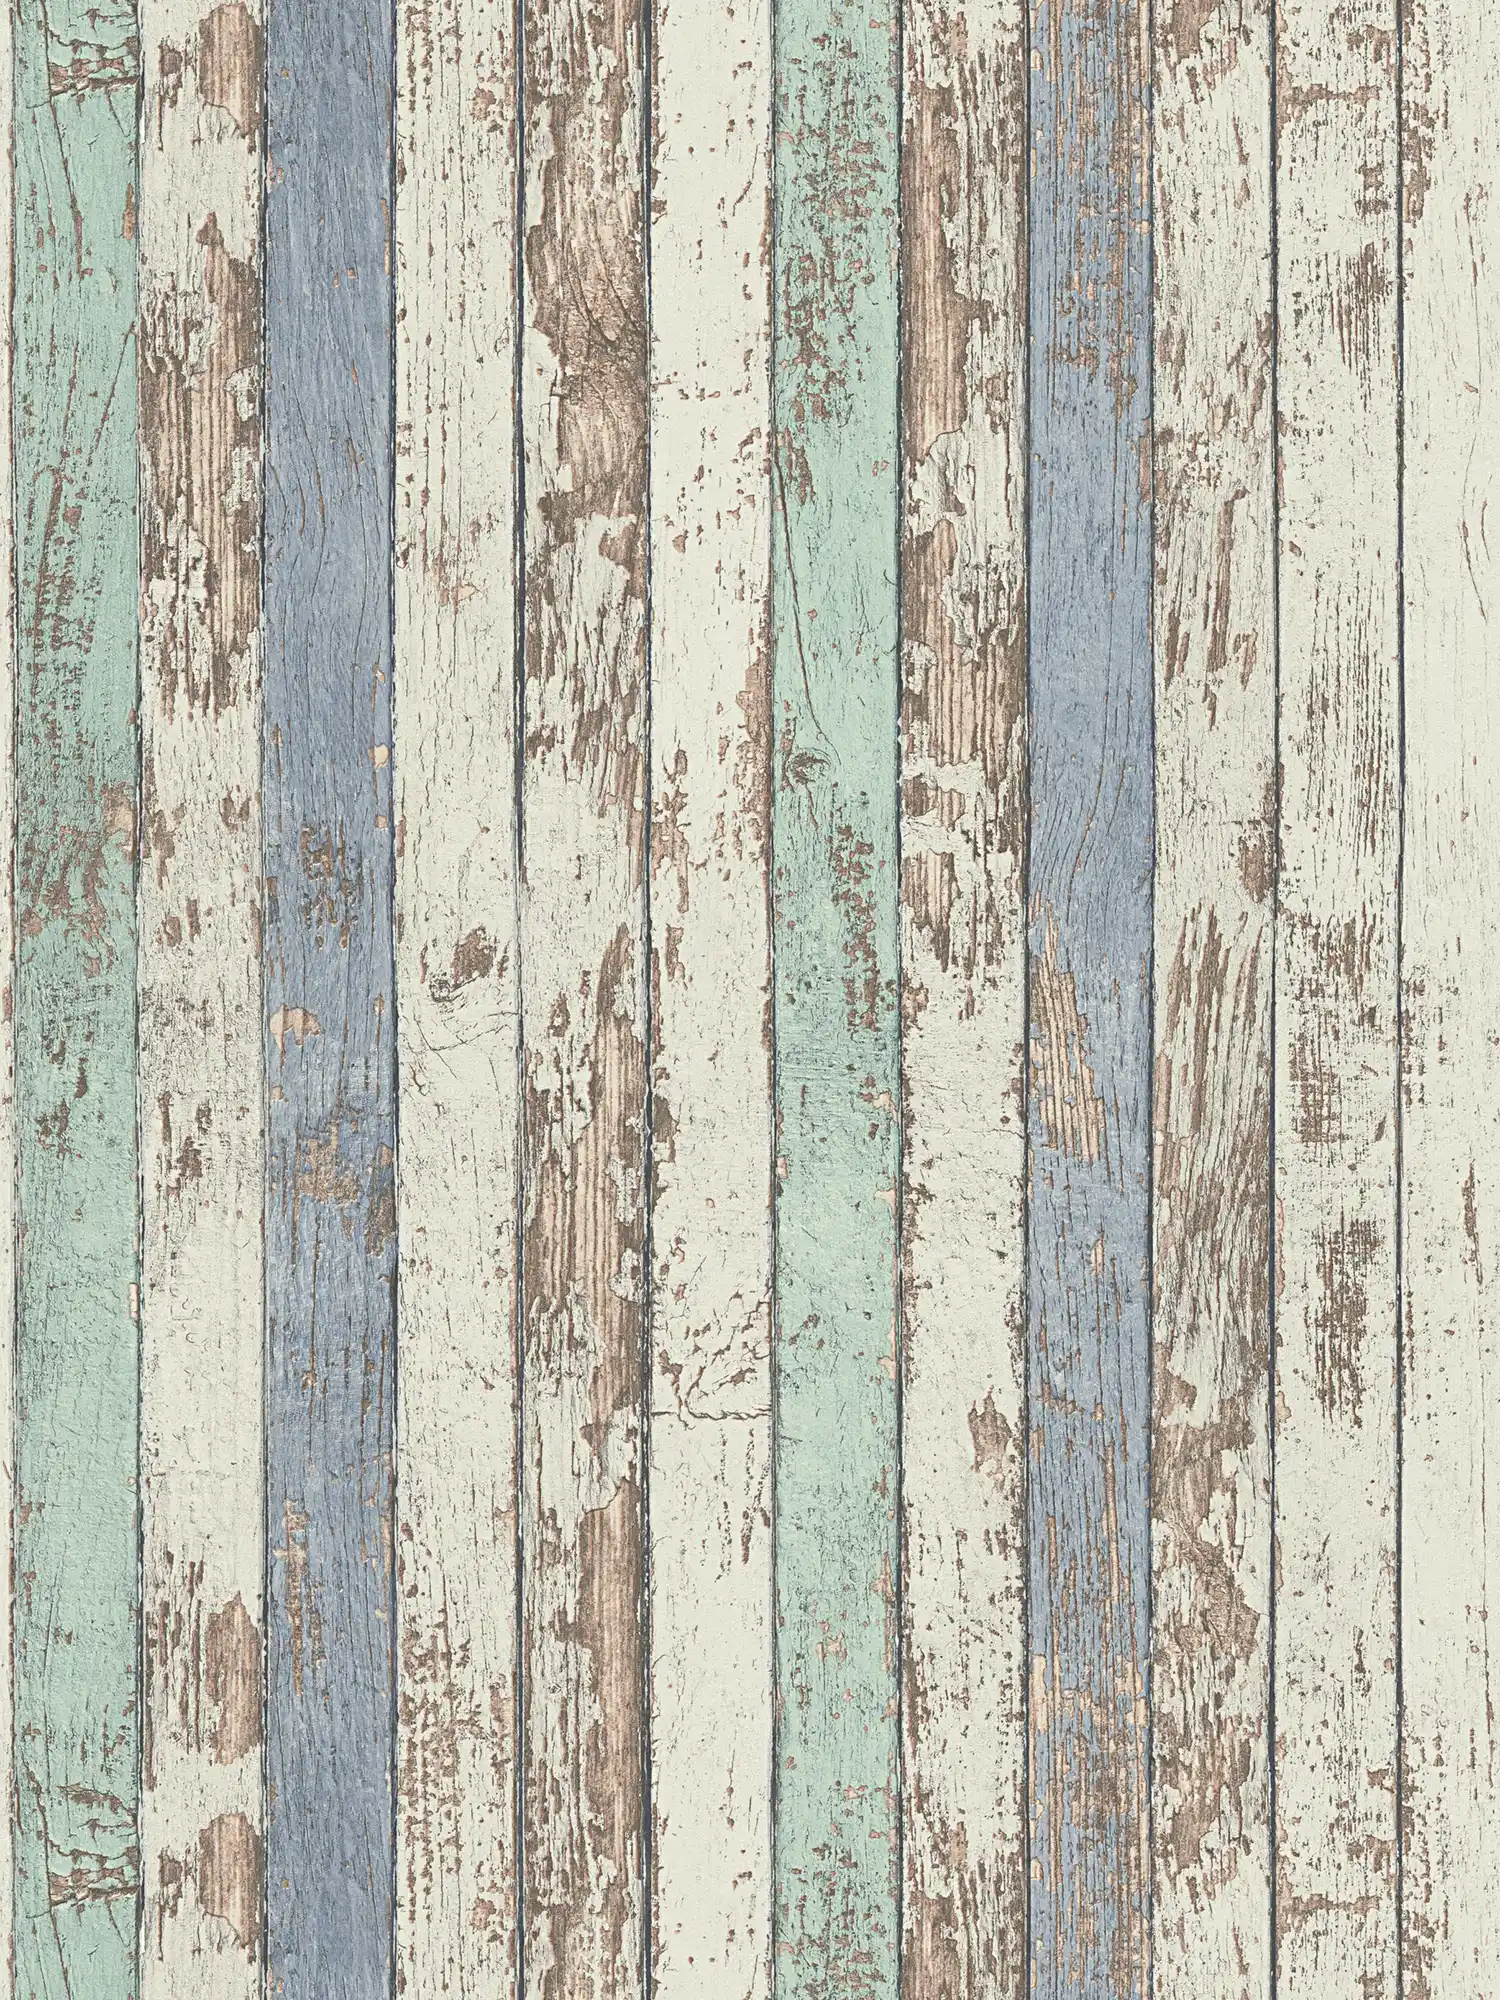 Holztapete mit buntem Brettermotiv im Shabby Chic Stil – Weiß, Braun, Blau
